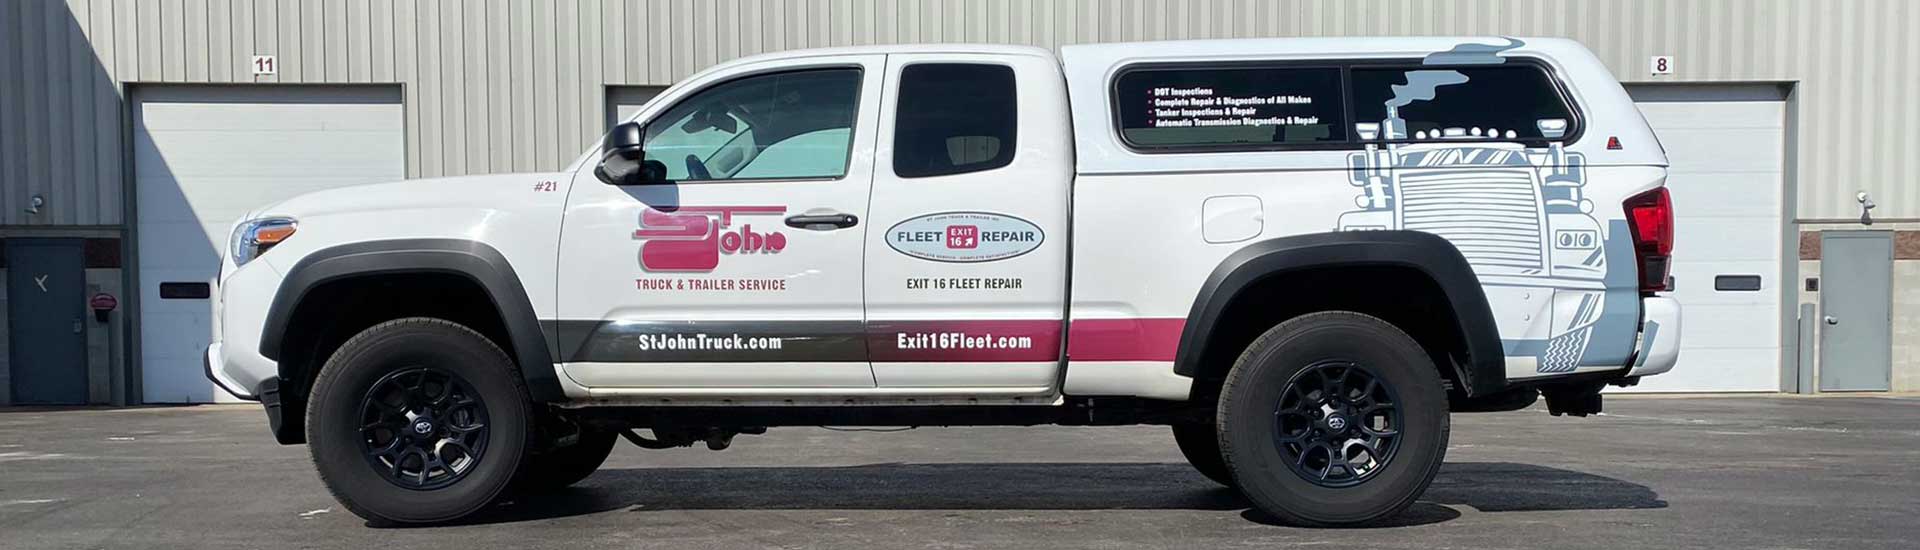 exit16-fleet-repair-coopersville-mi-truck-trailer-repair-service_slide4